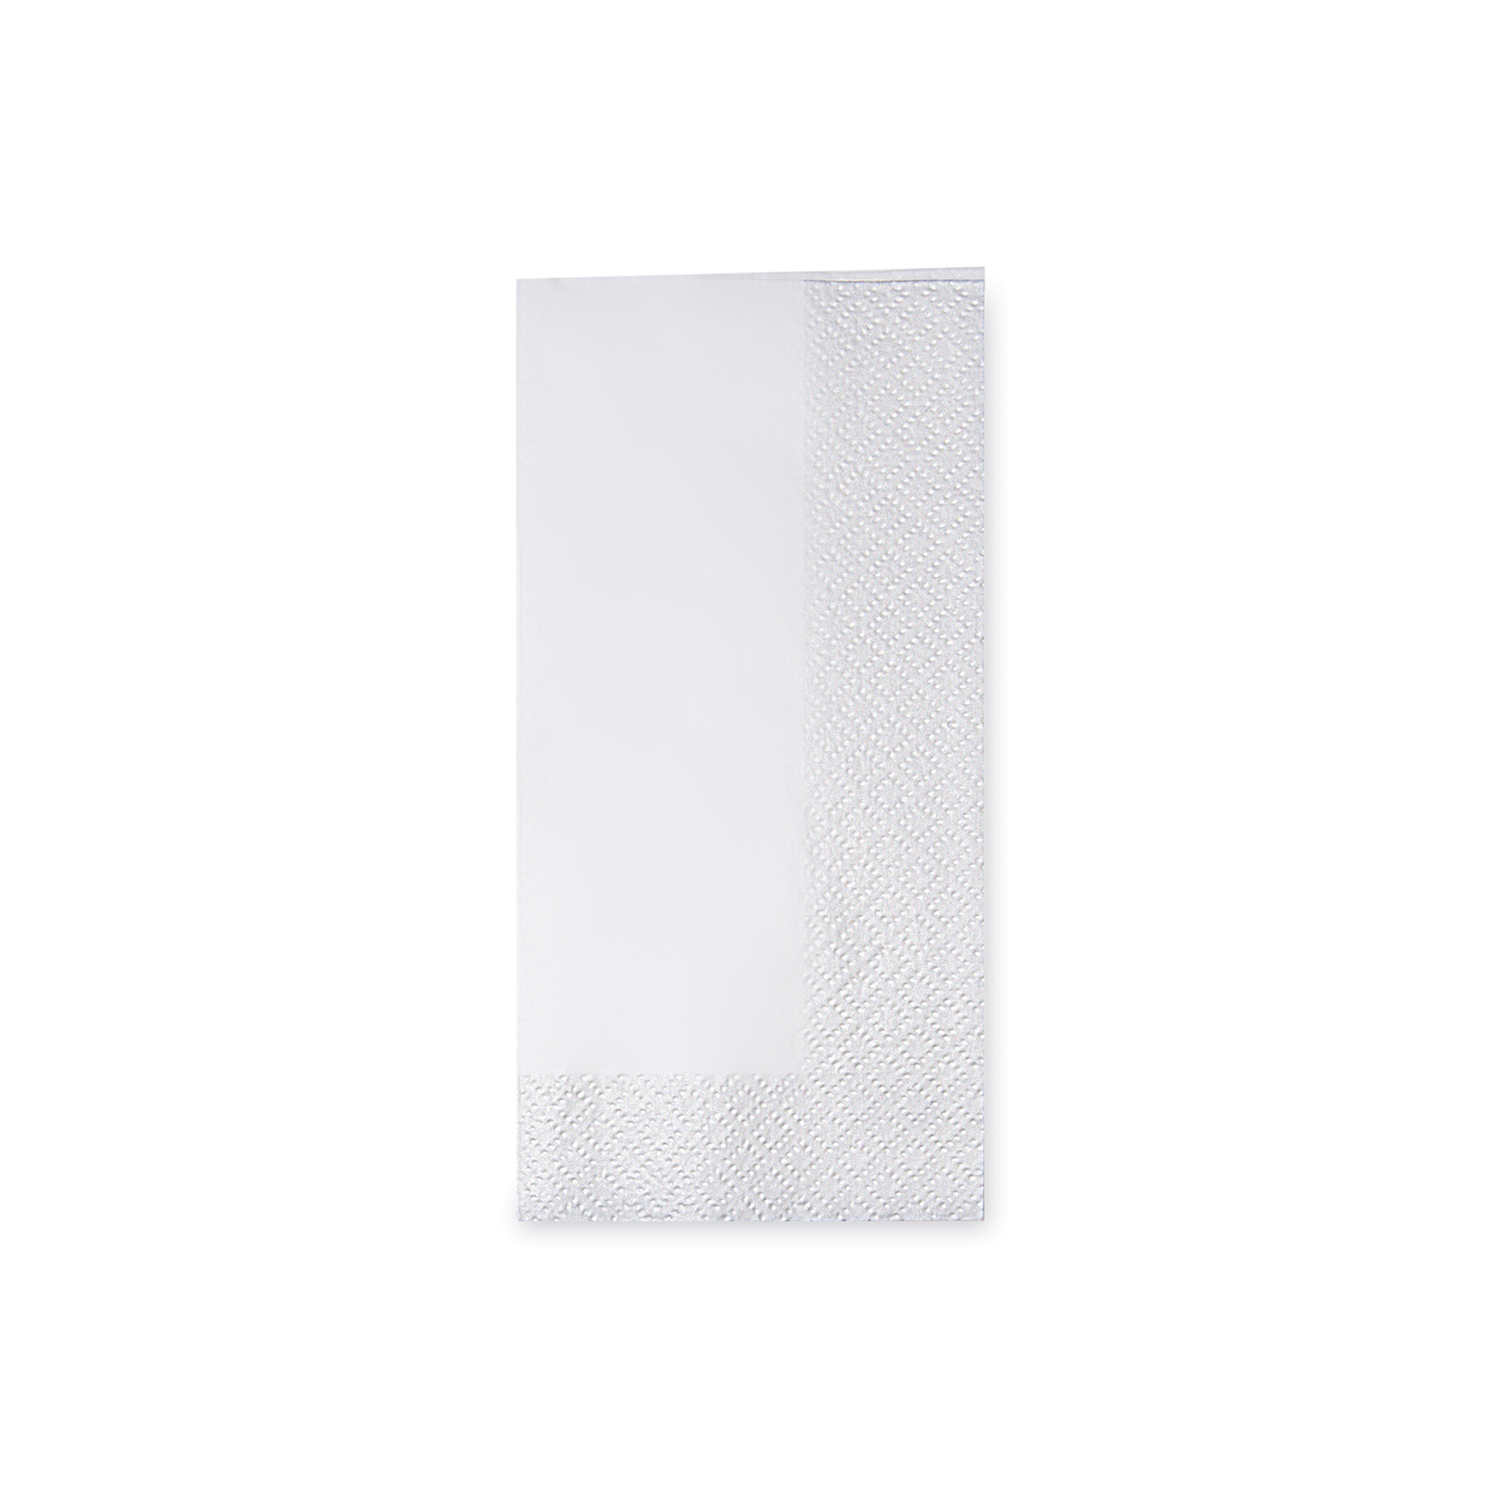 Imbiss-Serviette 2-lagig, 33 x 33 cm, 1/8 Falz, weiß, (8x250) 2000 Stück/Karton